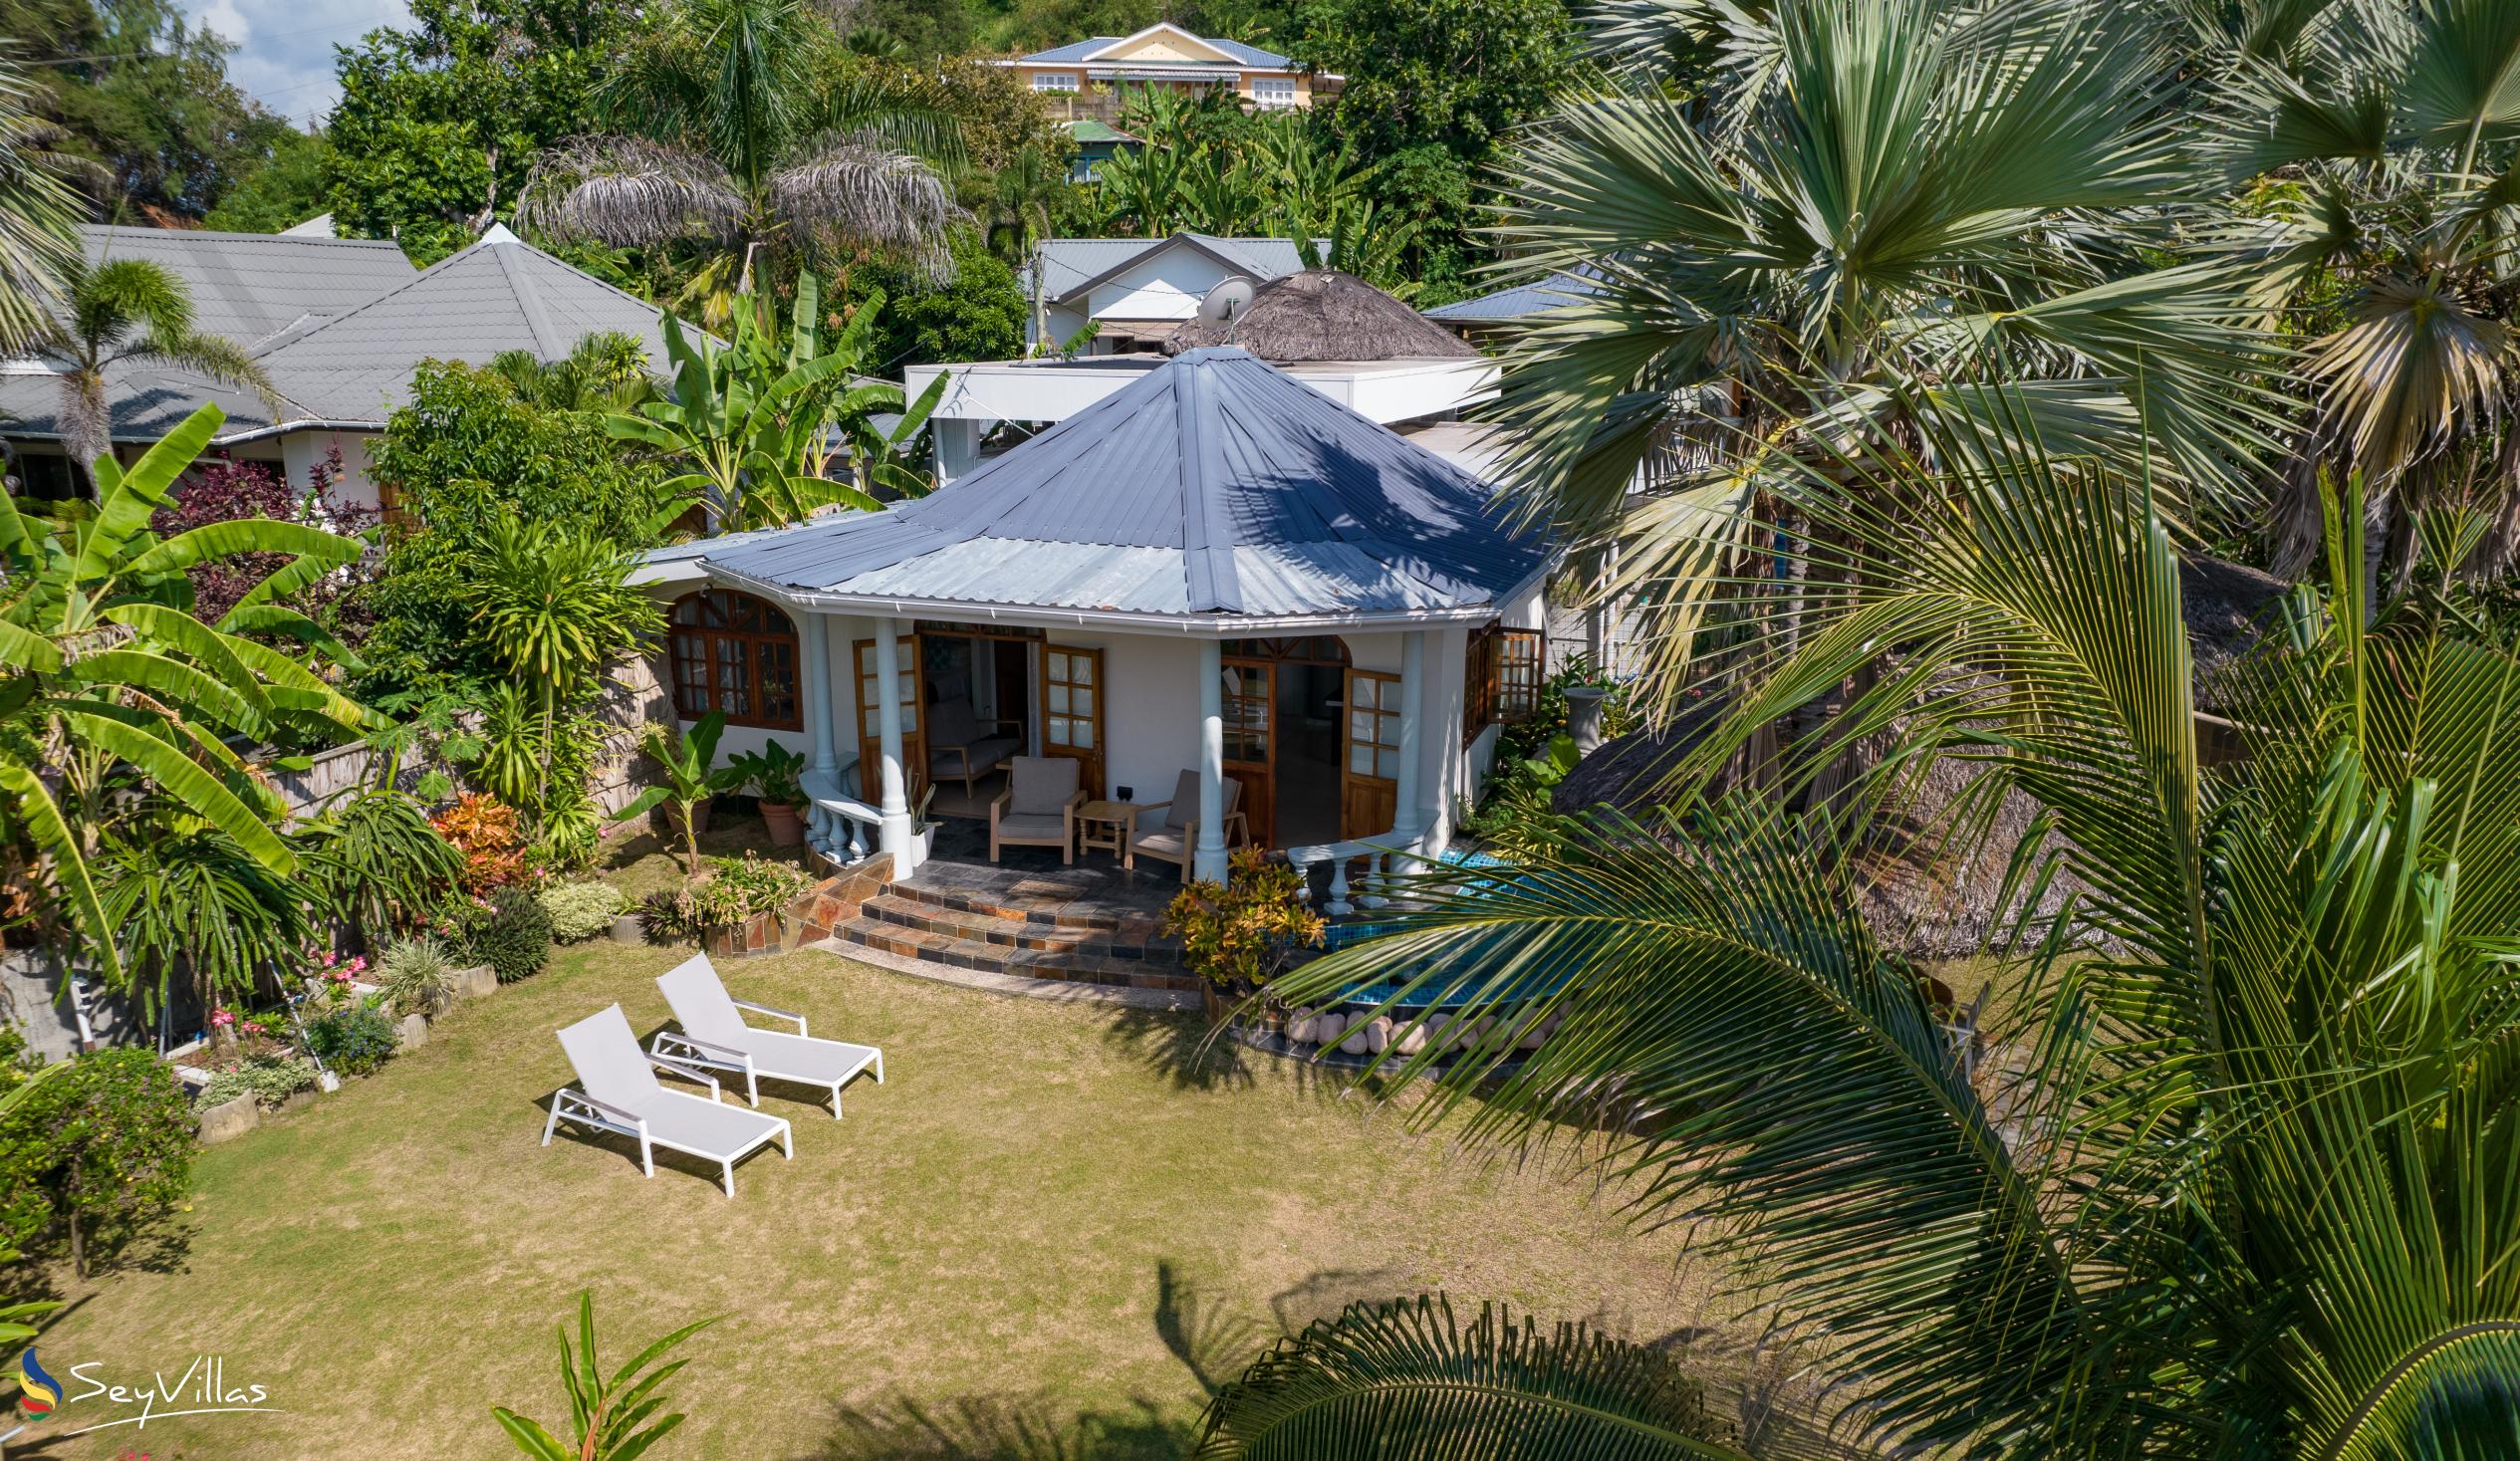 Photo 2: La Petite Maison - Outdoor area - Praslin (Seychelles)